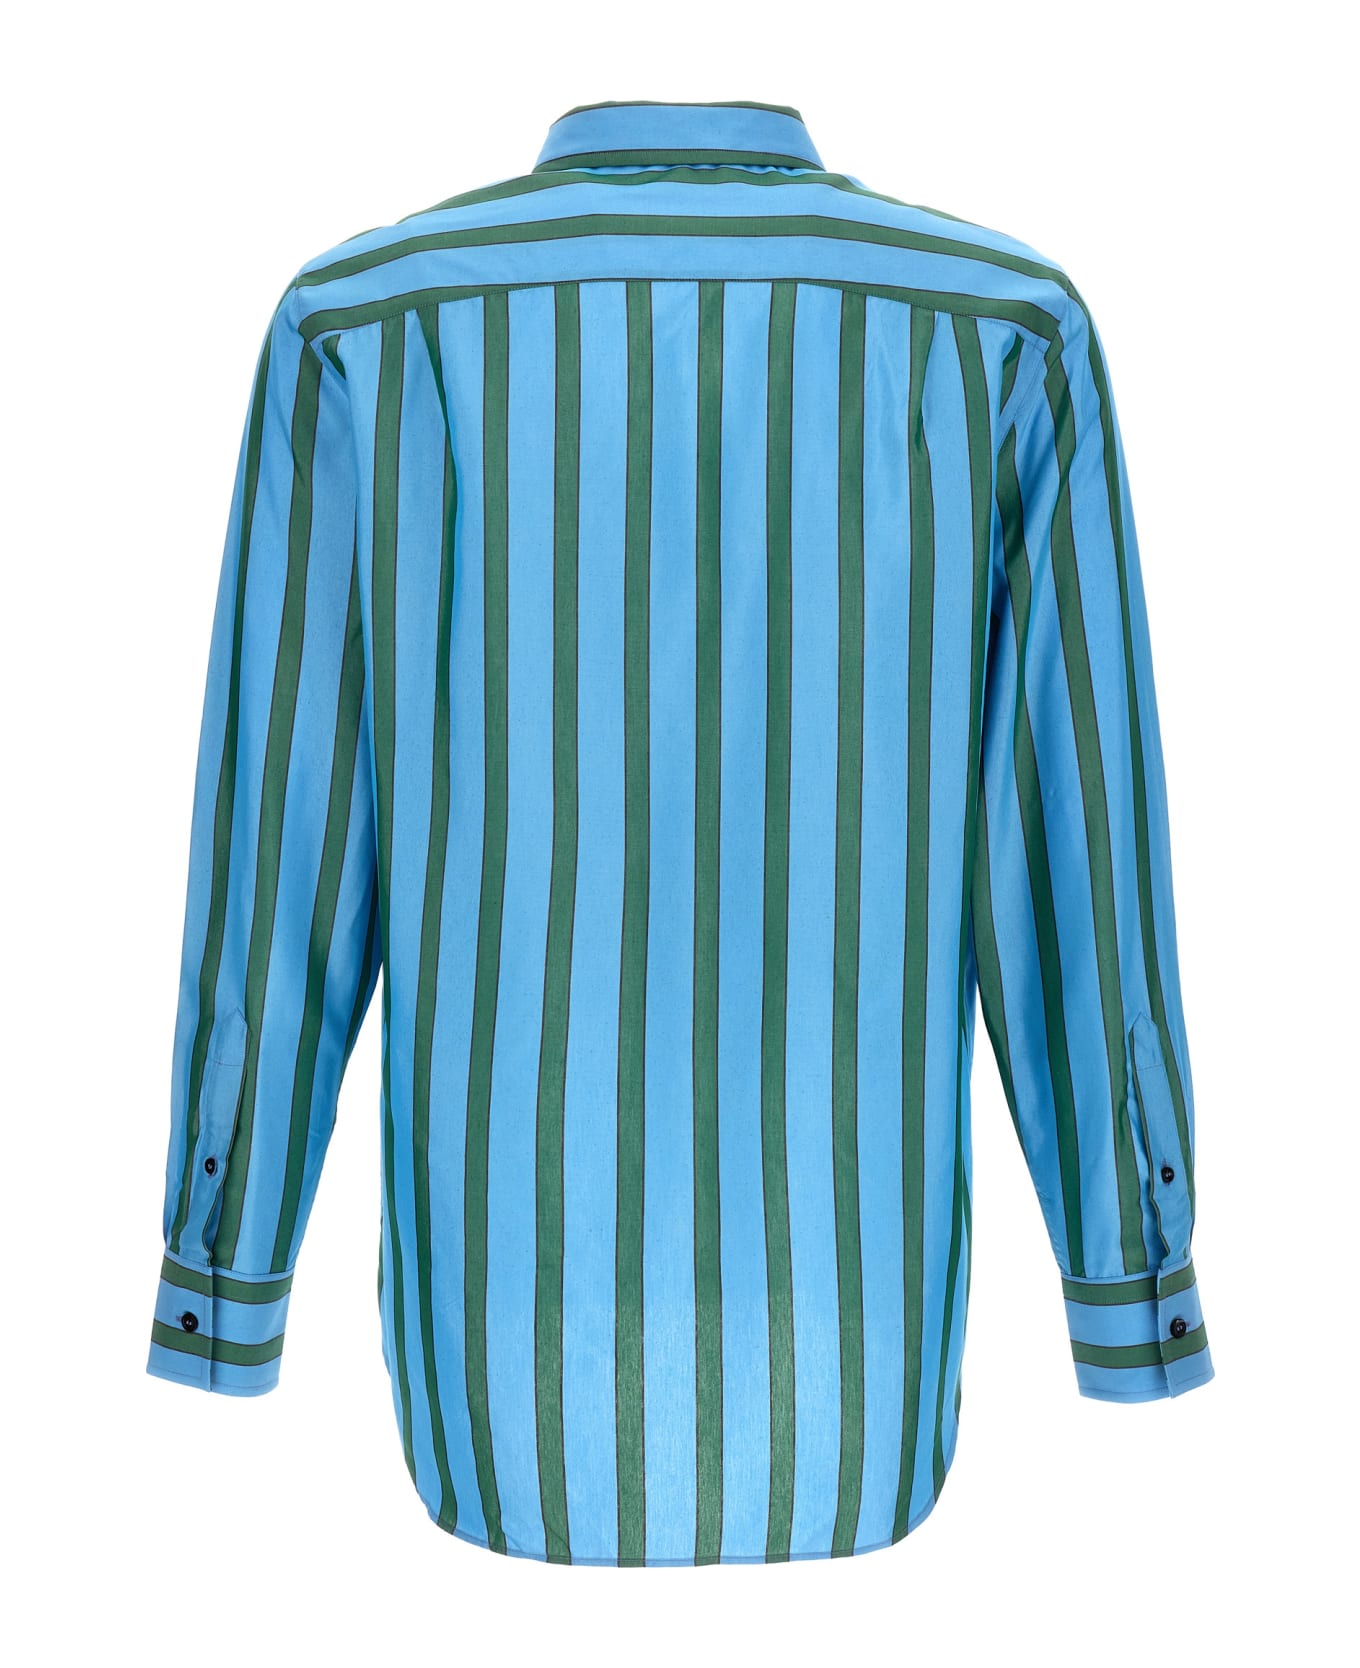 Wales Bonner 'langstone' Shirt - Multicolor シャツ